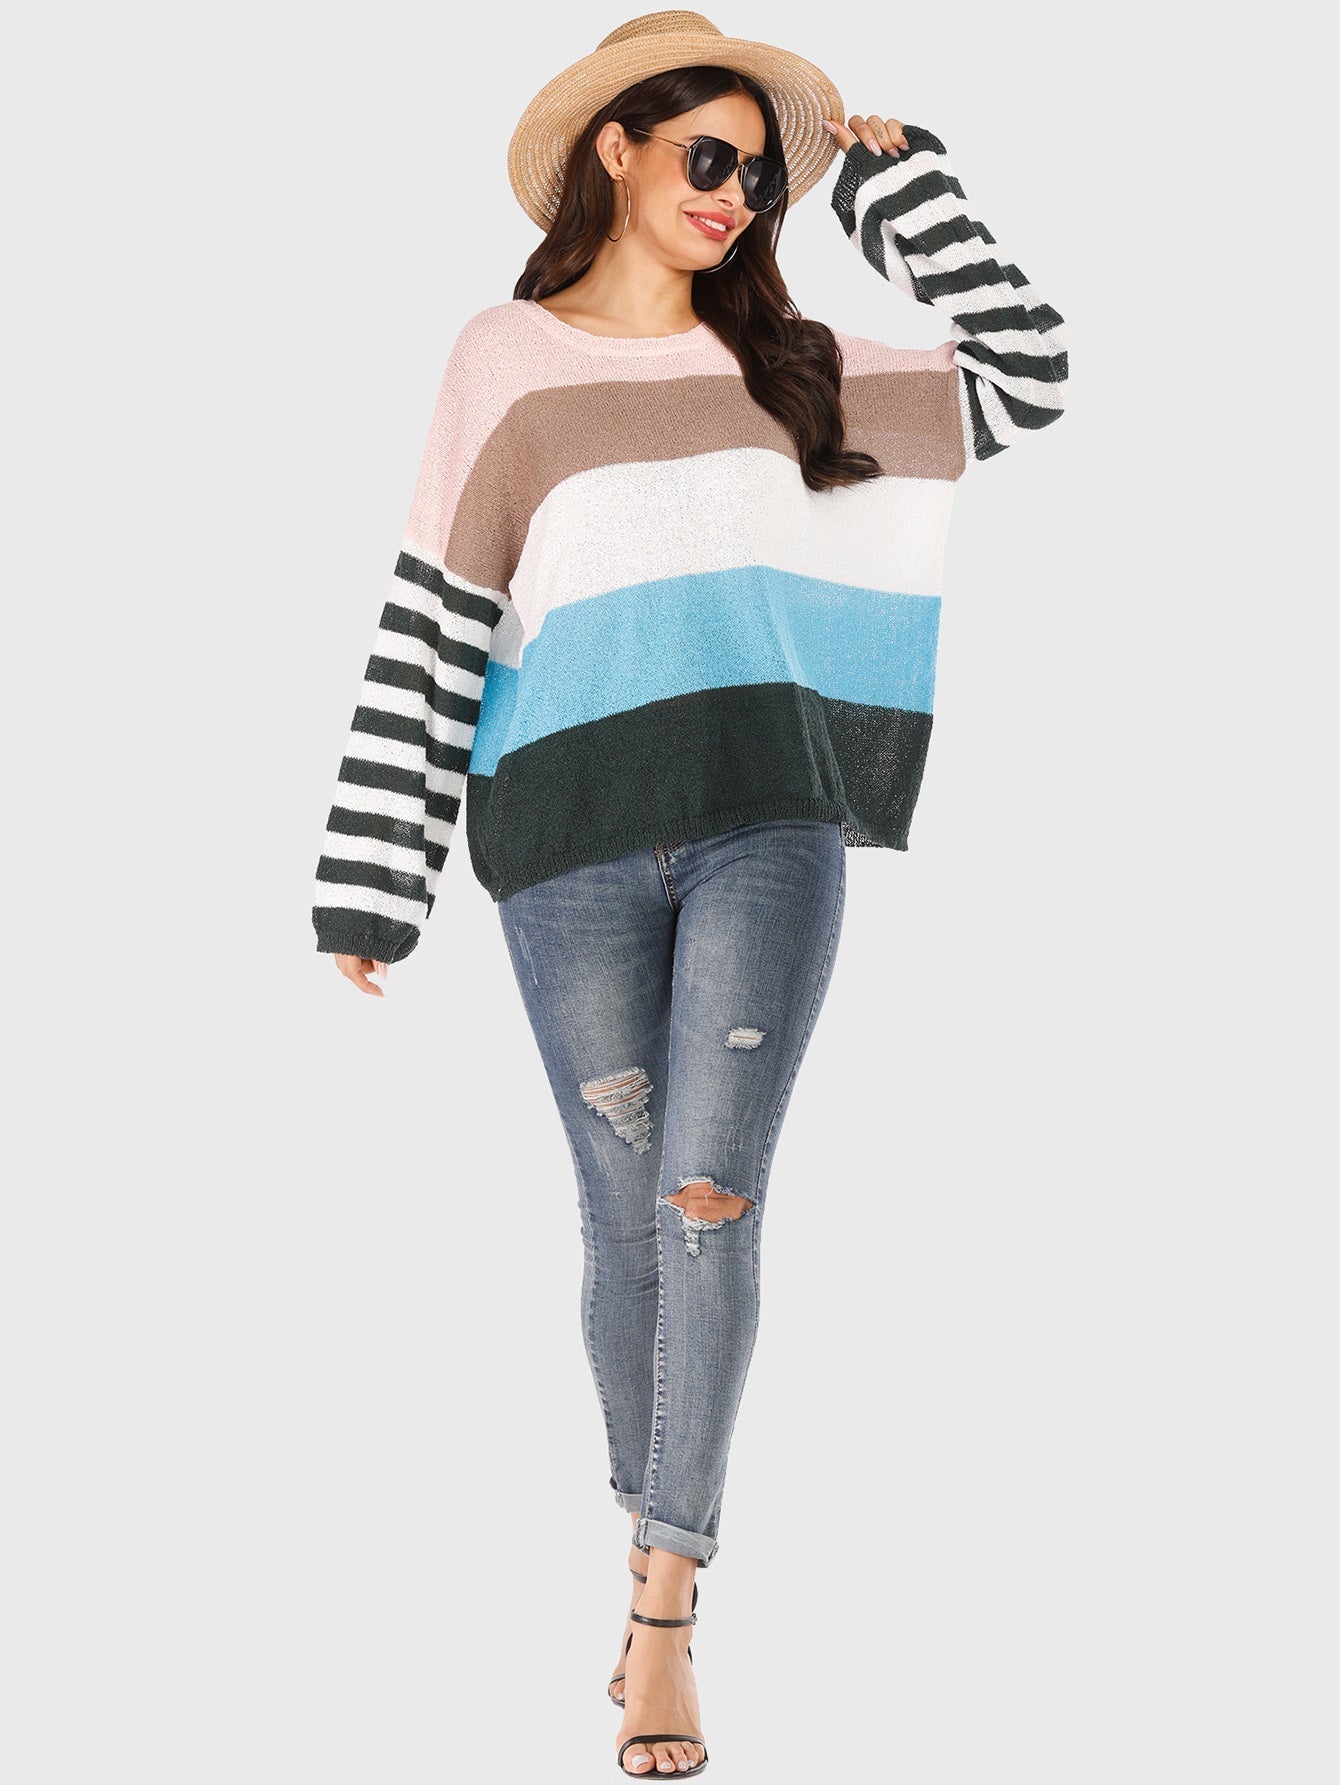 Drop Shoulder Striped Colorblock  Sweater Sai Feel